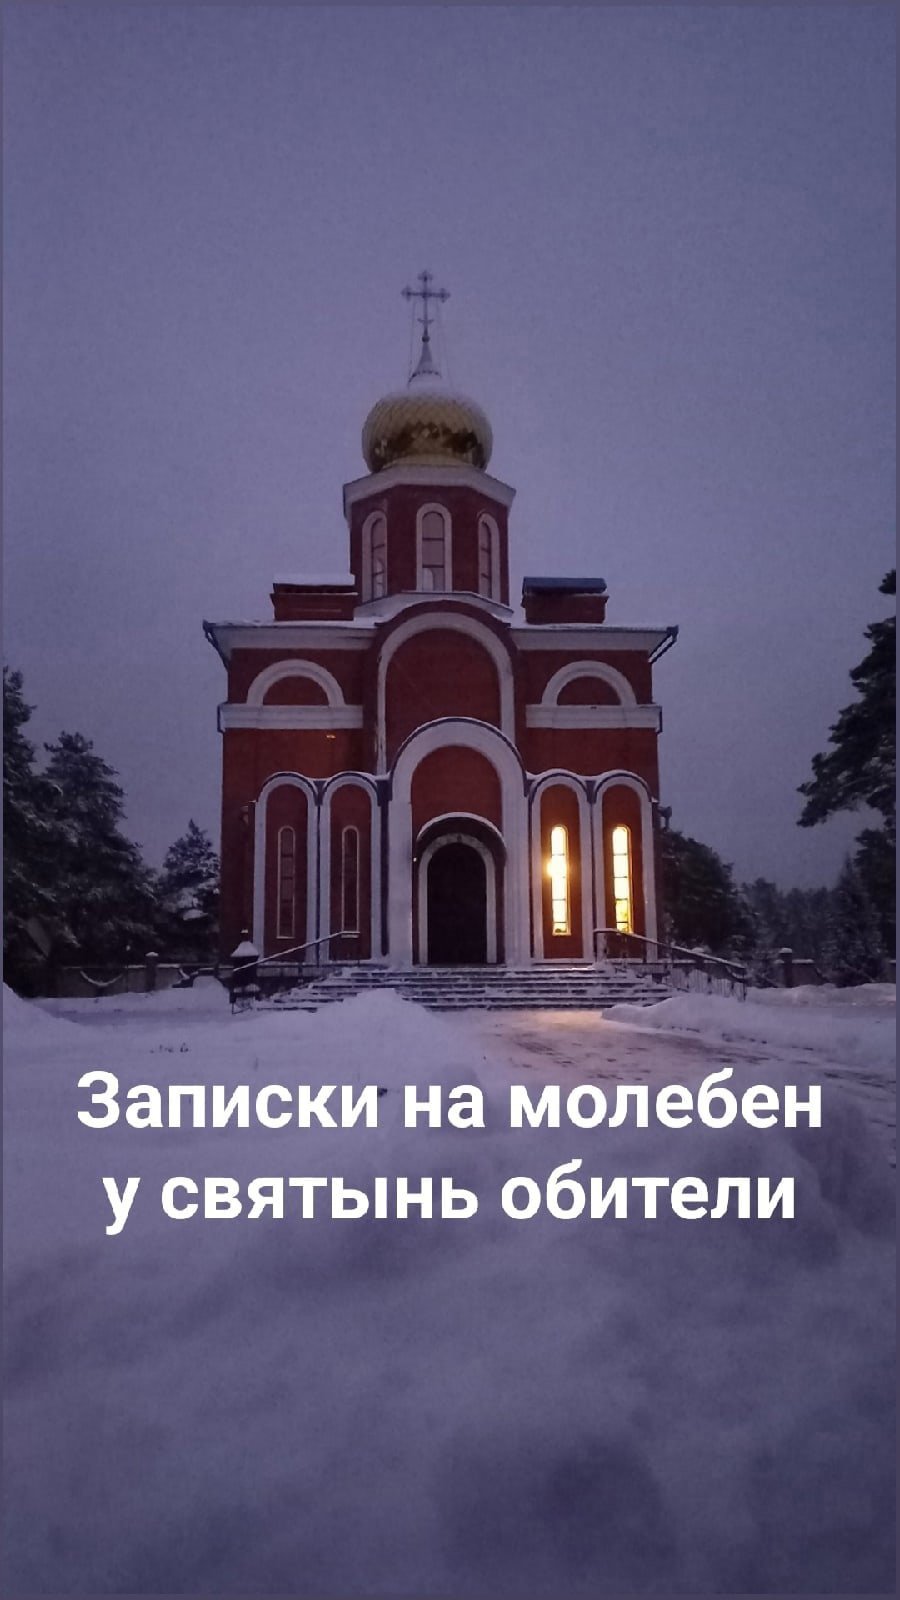 Церковь Рождества Христова, Домодедово